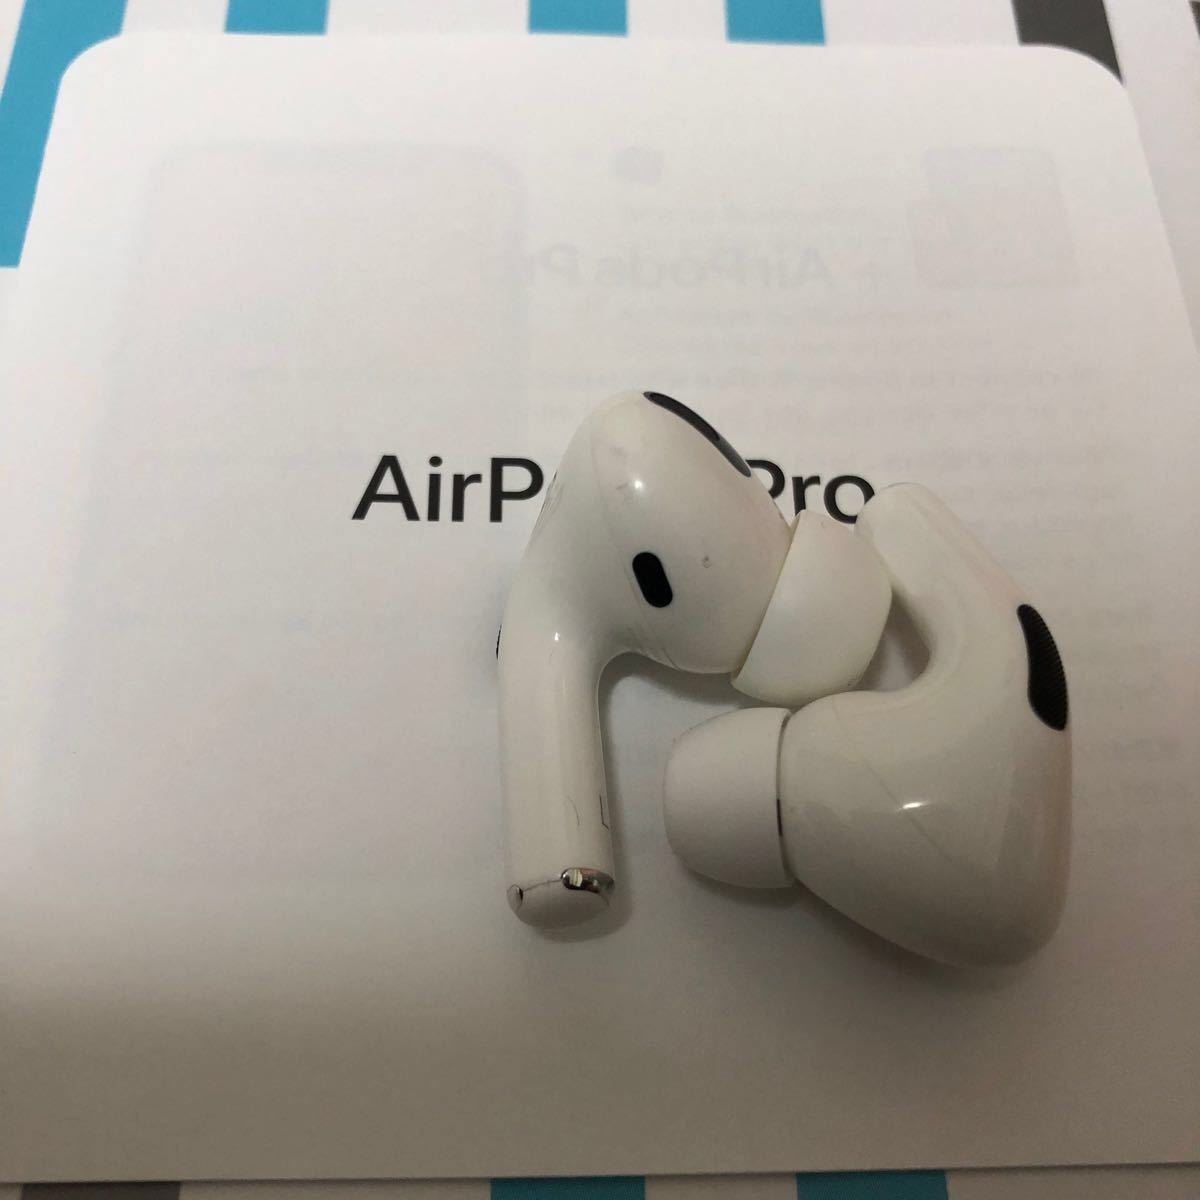 入荷中 Apple AirPods Pro Pro 充電ケース AirPods 第1世代 正規品 両 ...